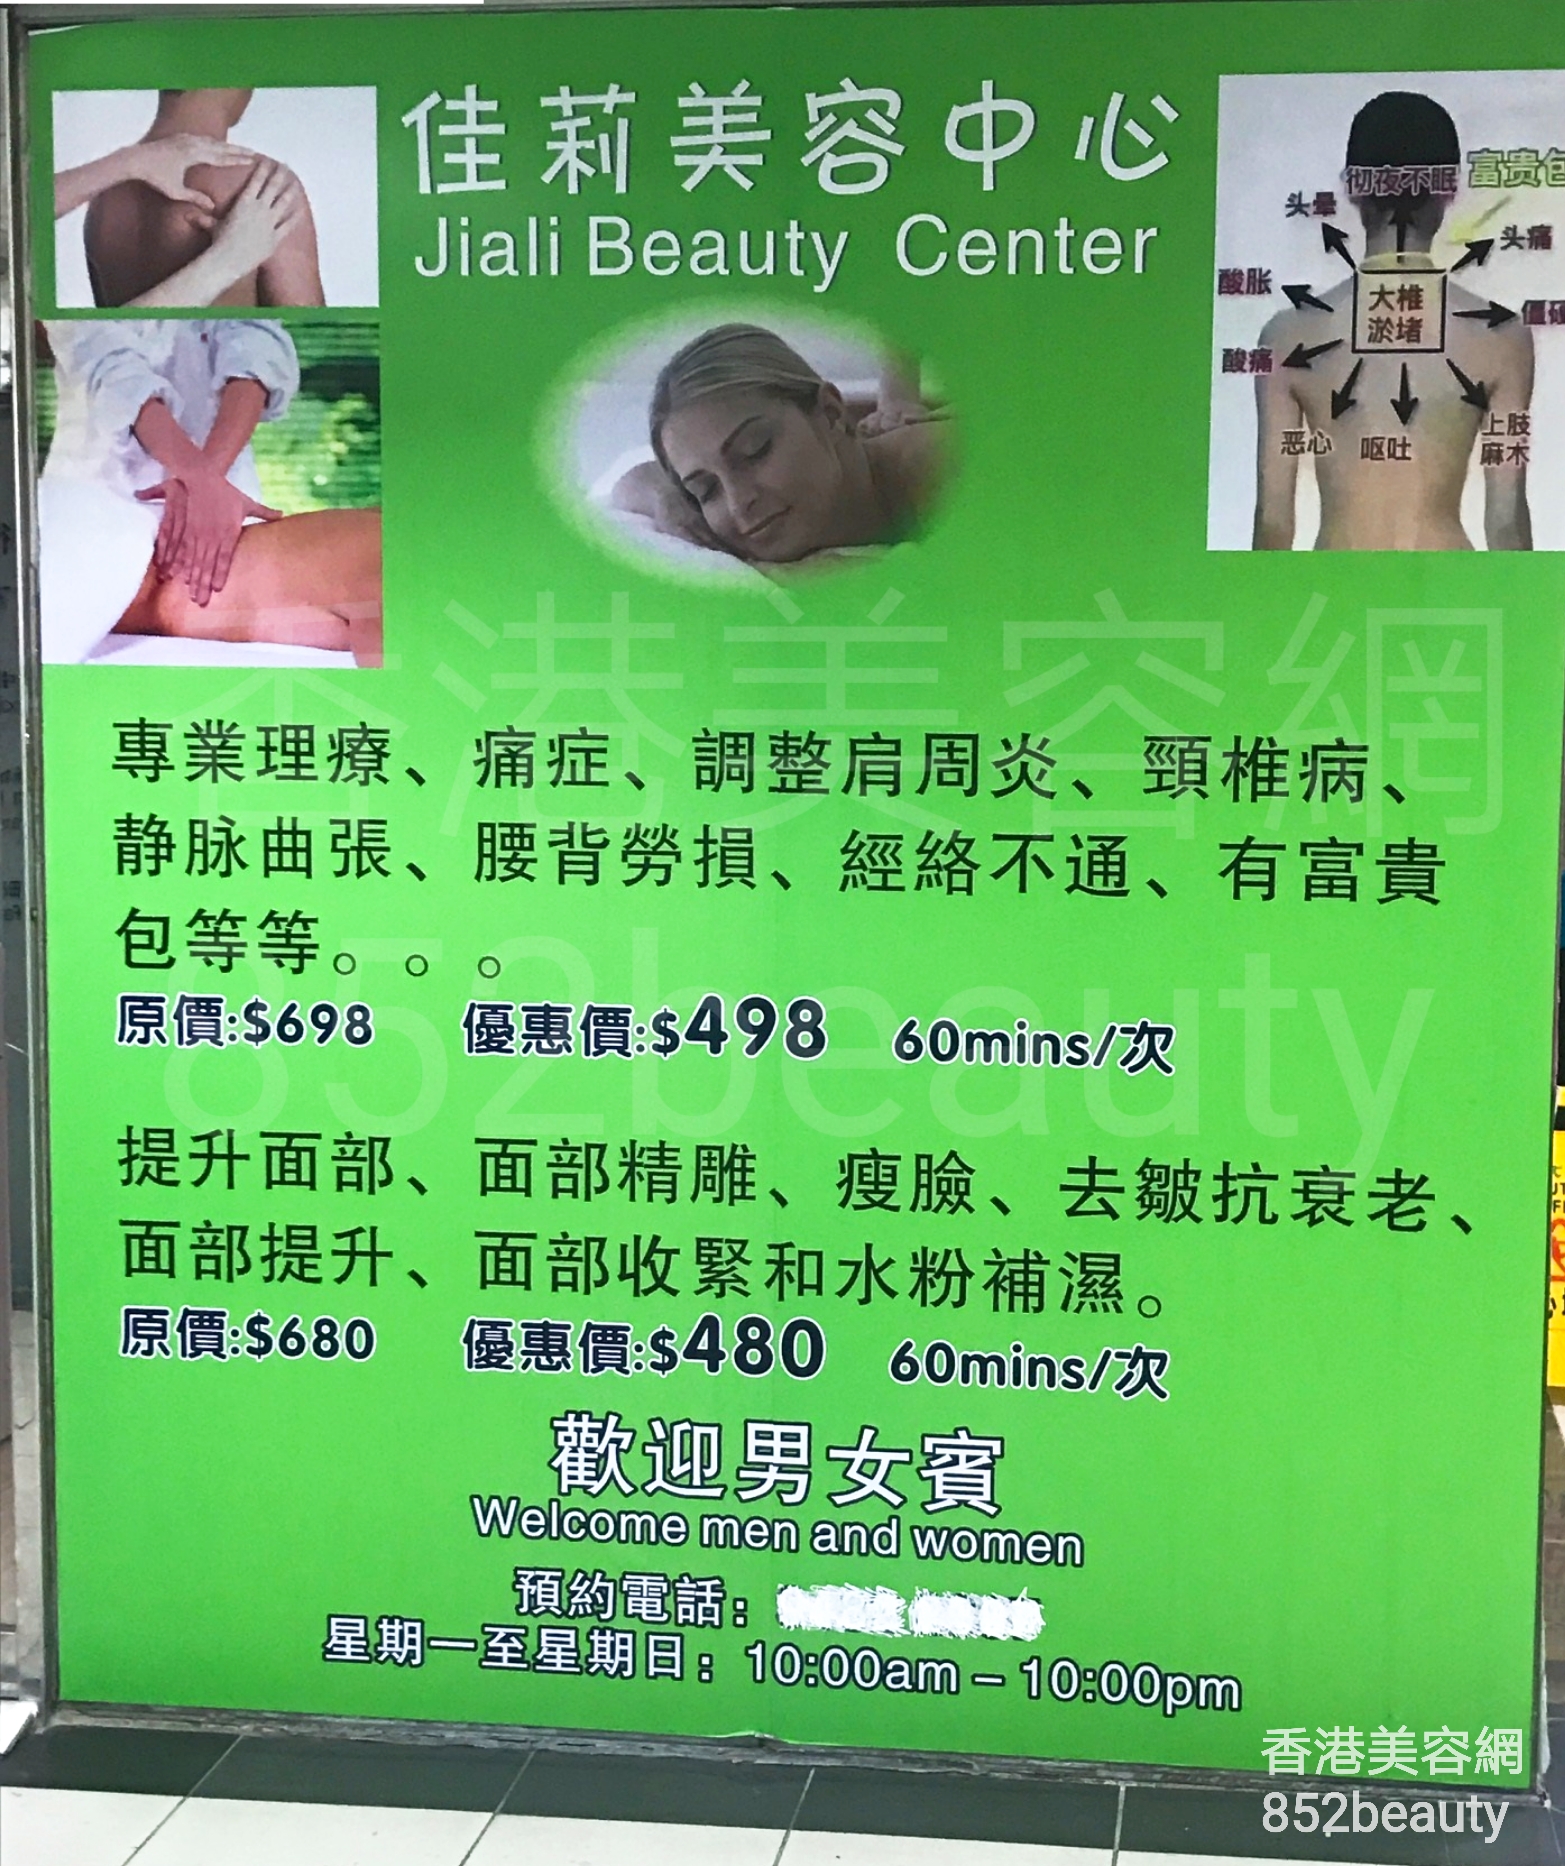 Facial Care: 佳莉美容中心 Jiali Beauty Center